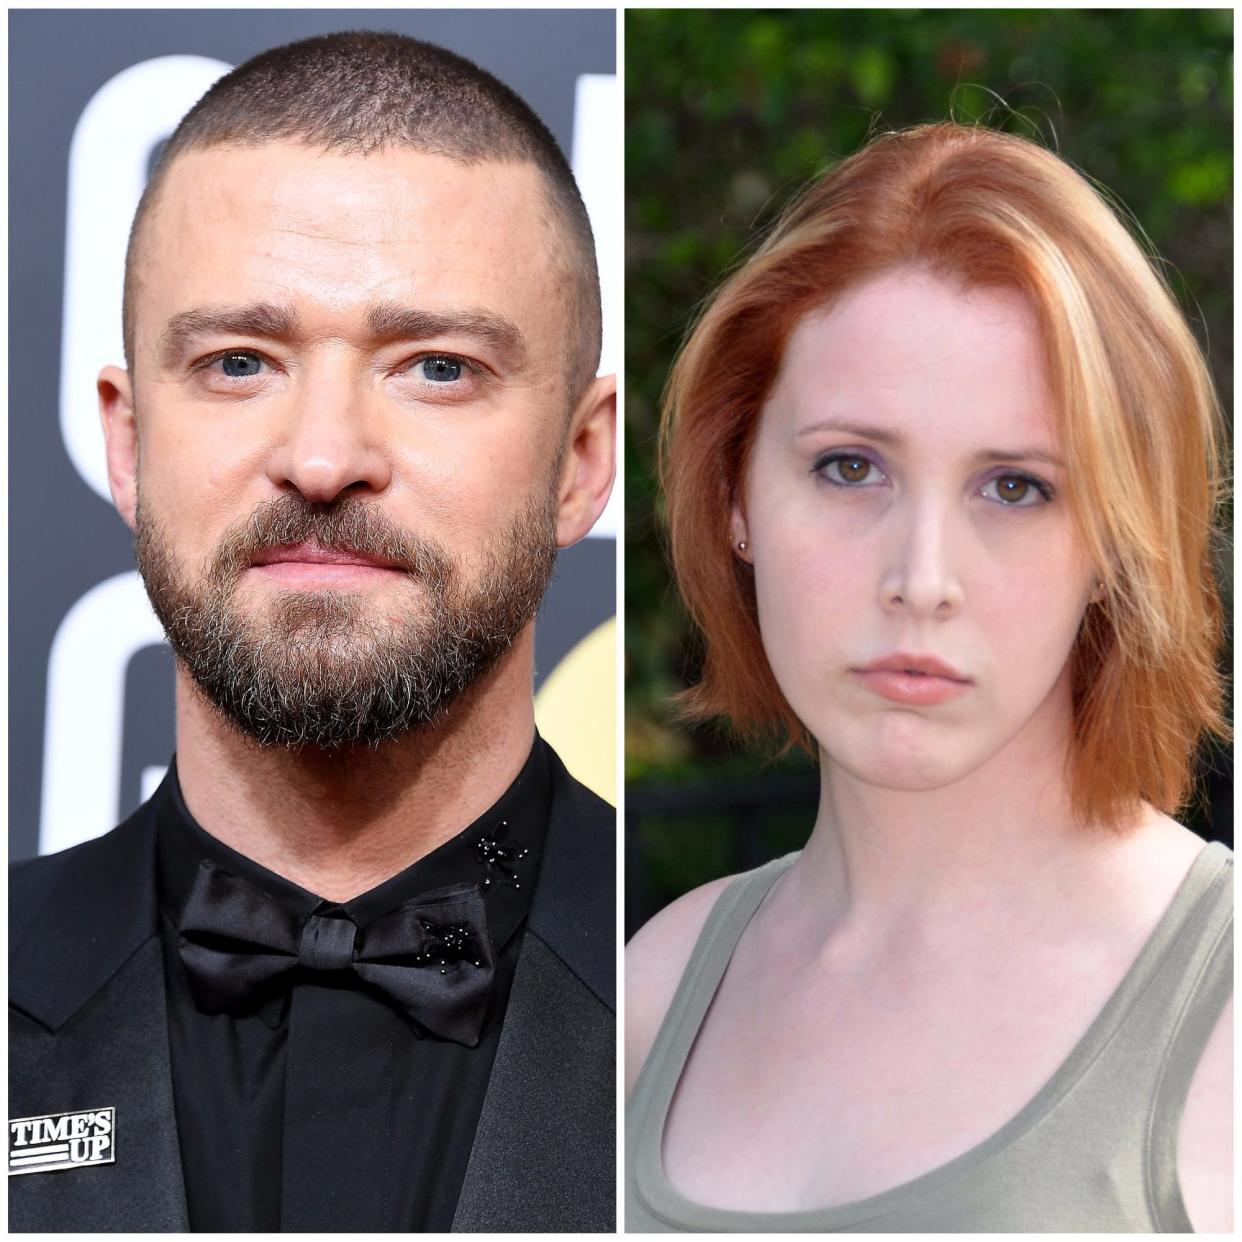 Dylan Farrow has blasted Justin Timberlake on Twitter - Steve Granitz/Frances Silver